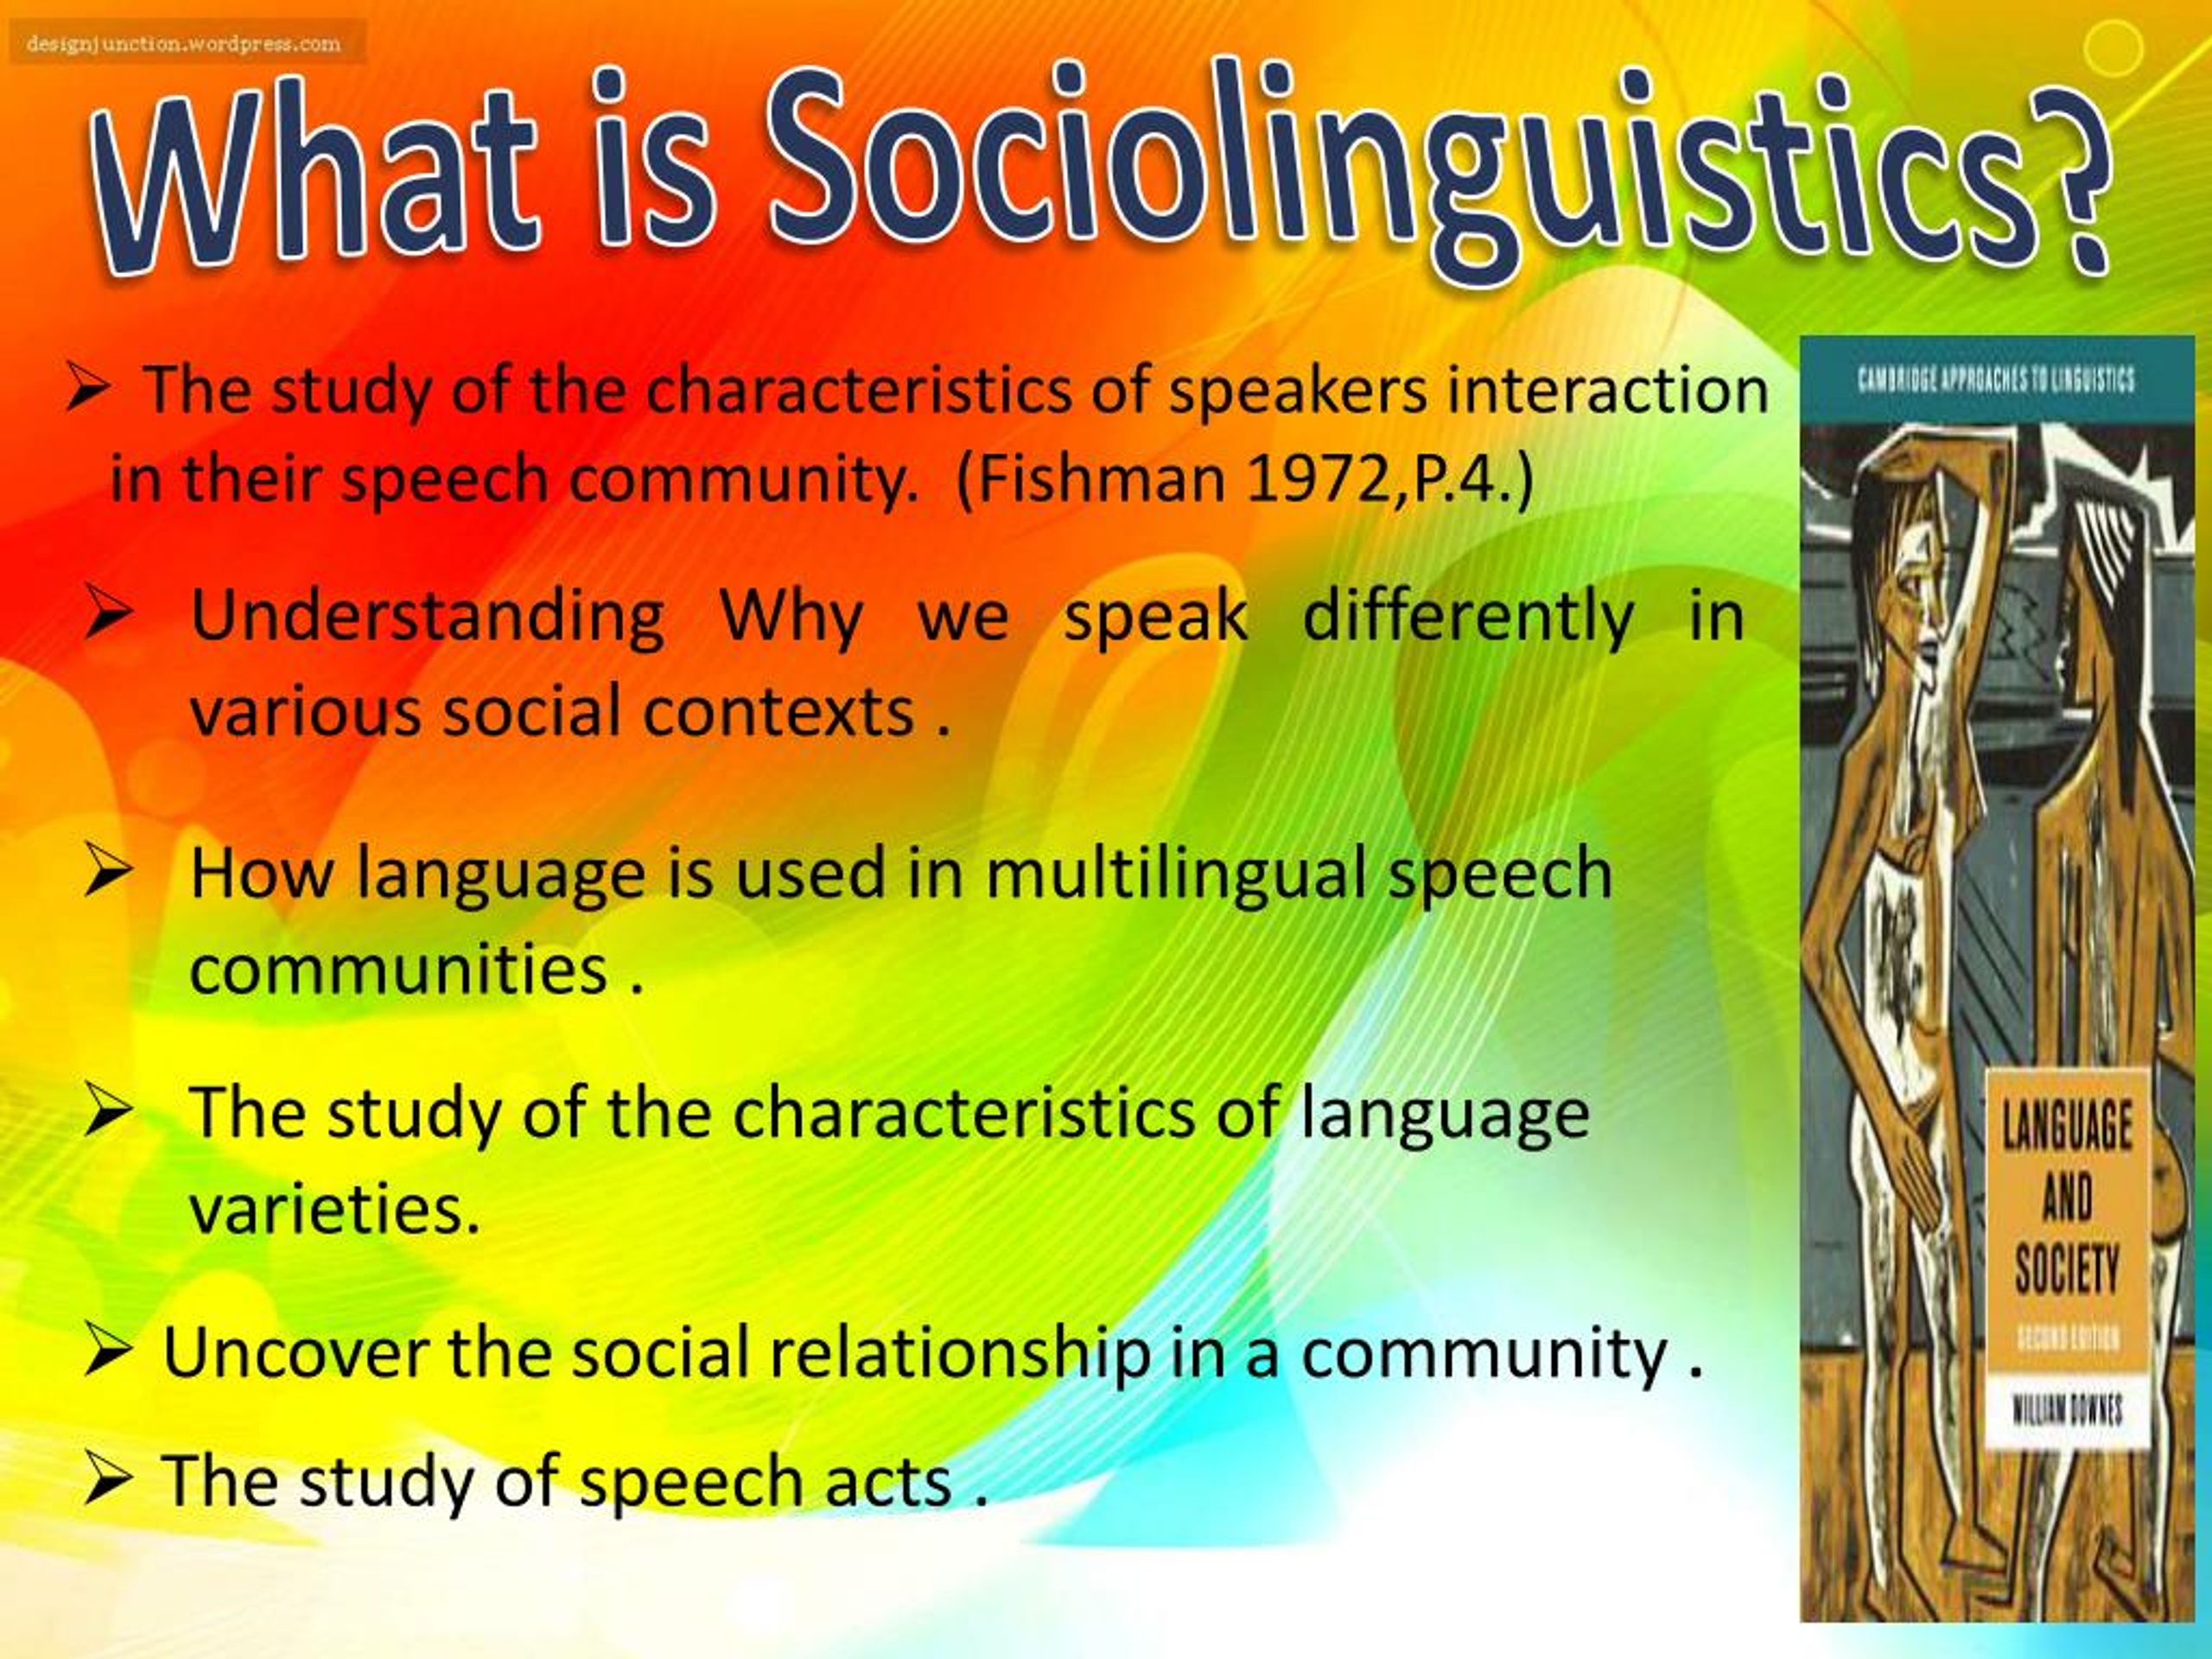 research topics related sociolinguistics